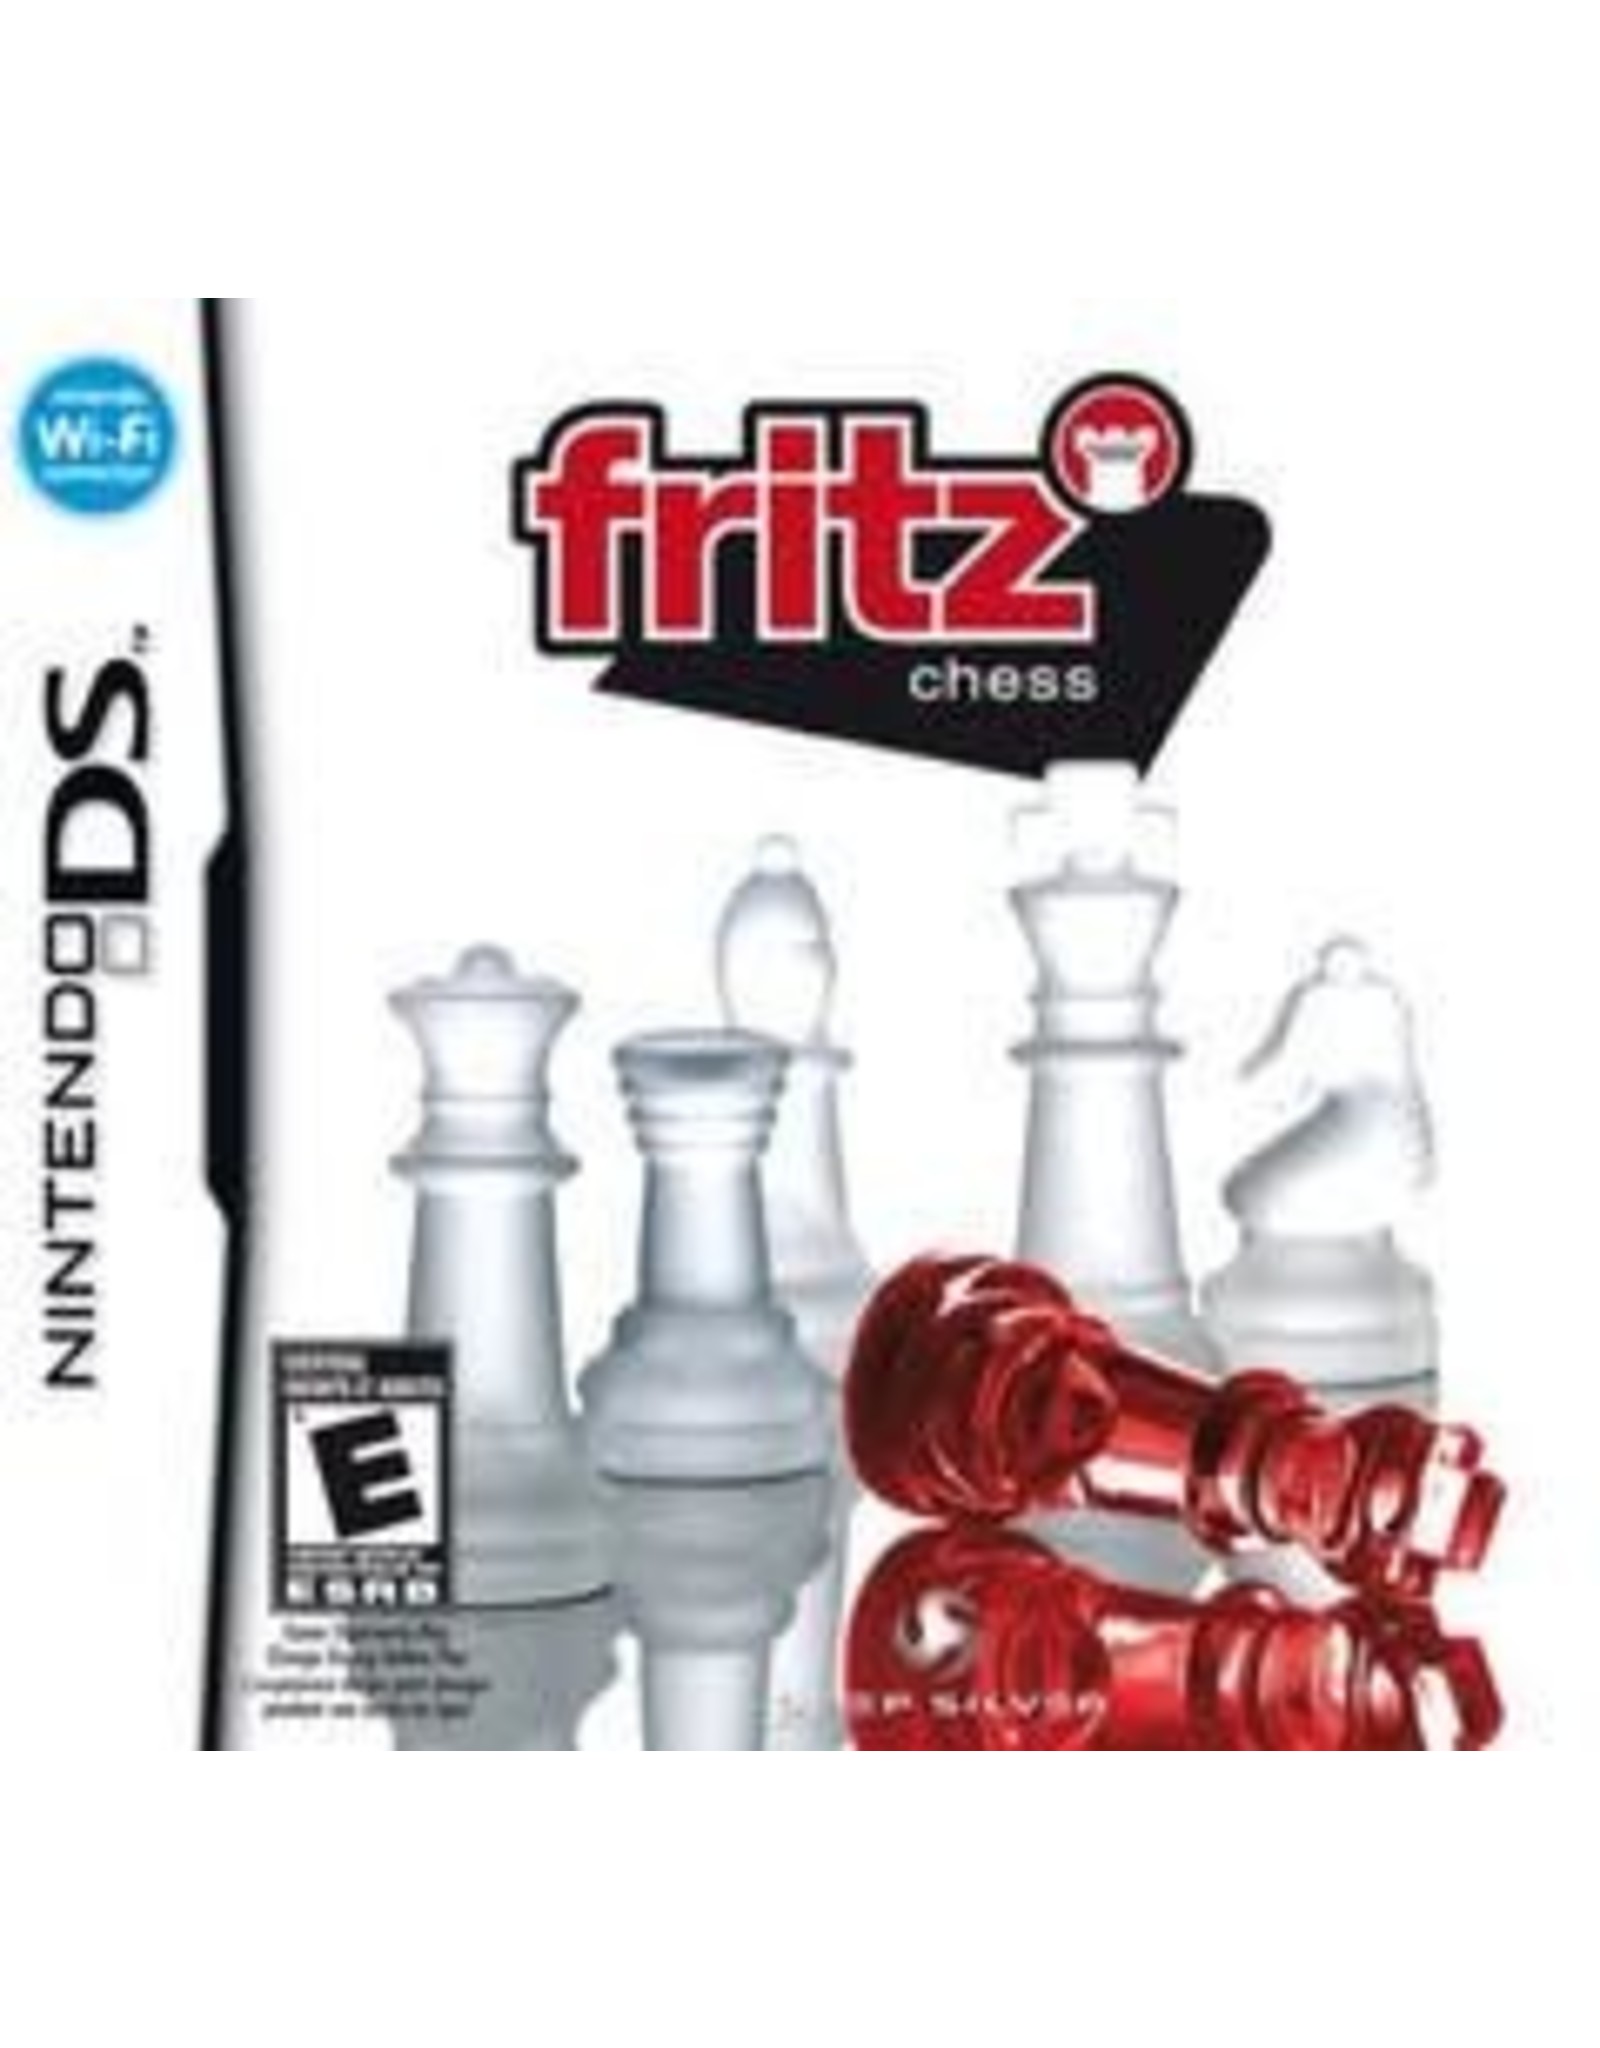 Nintendo DS Fritz Chess (CiB)